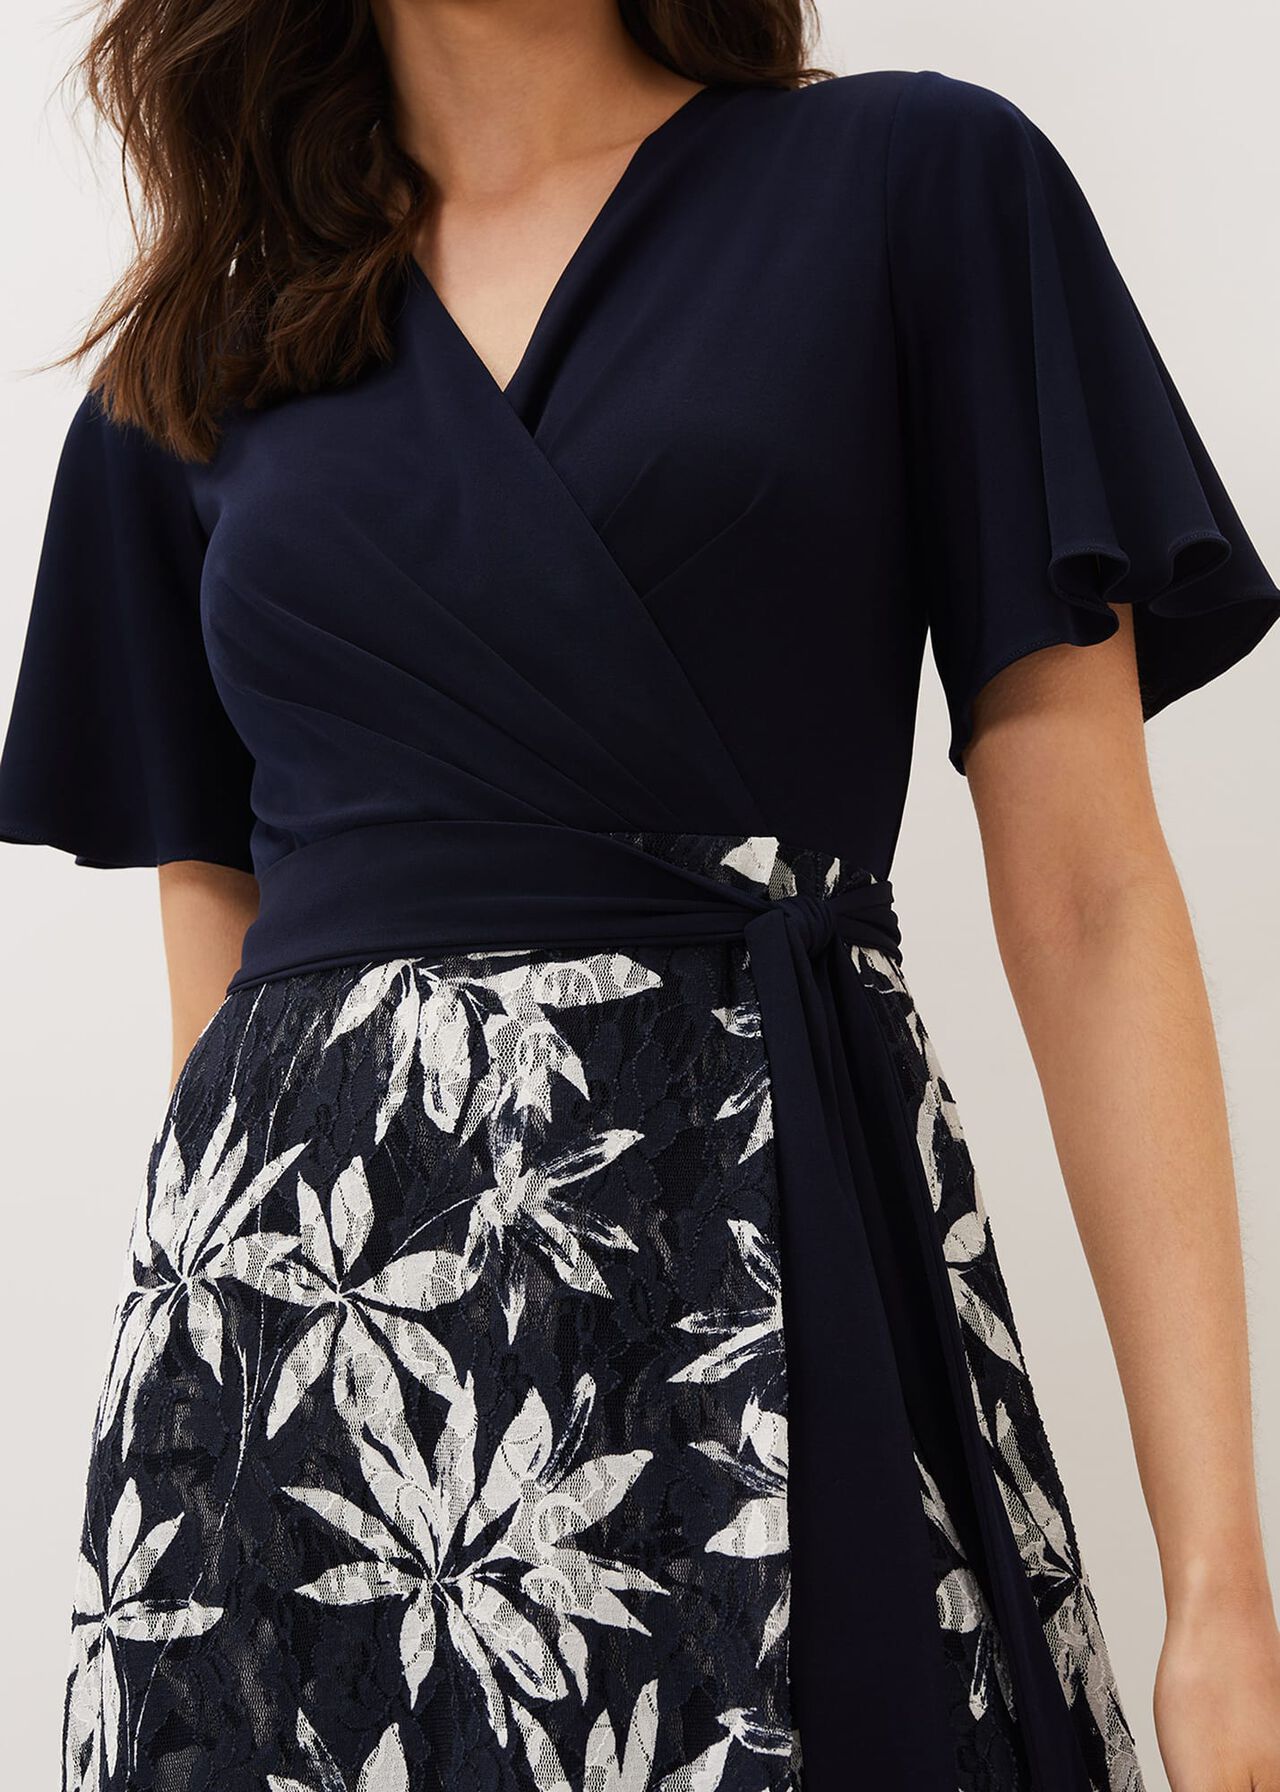 Brogan Lace Skirt Maxi Dress